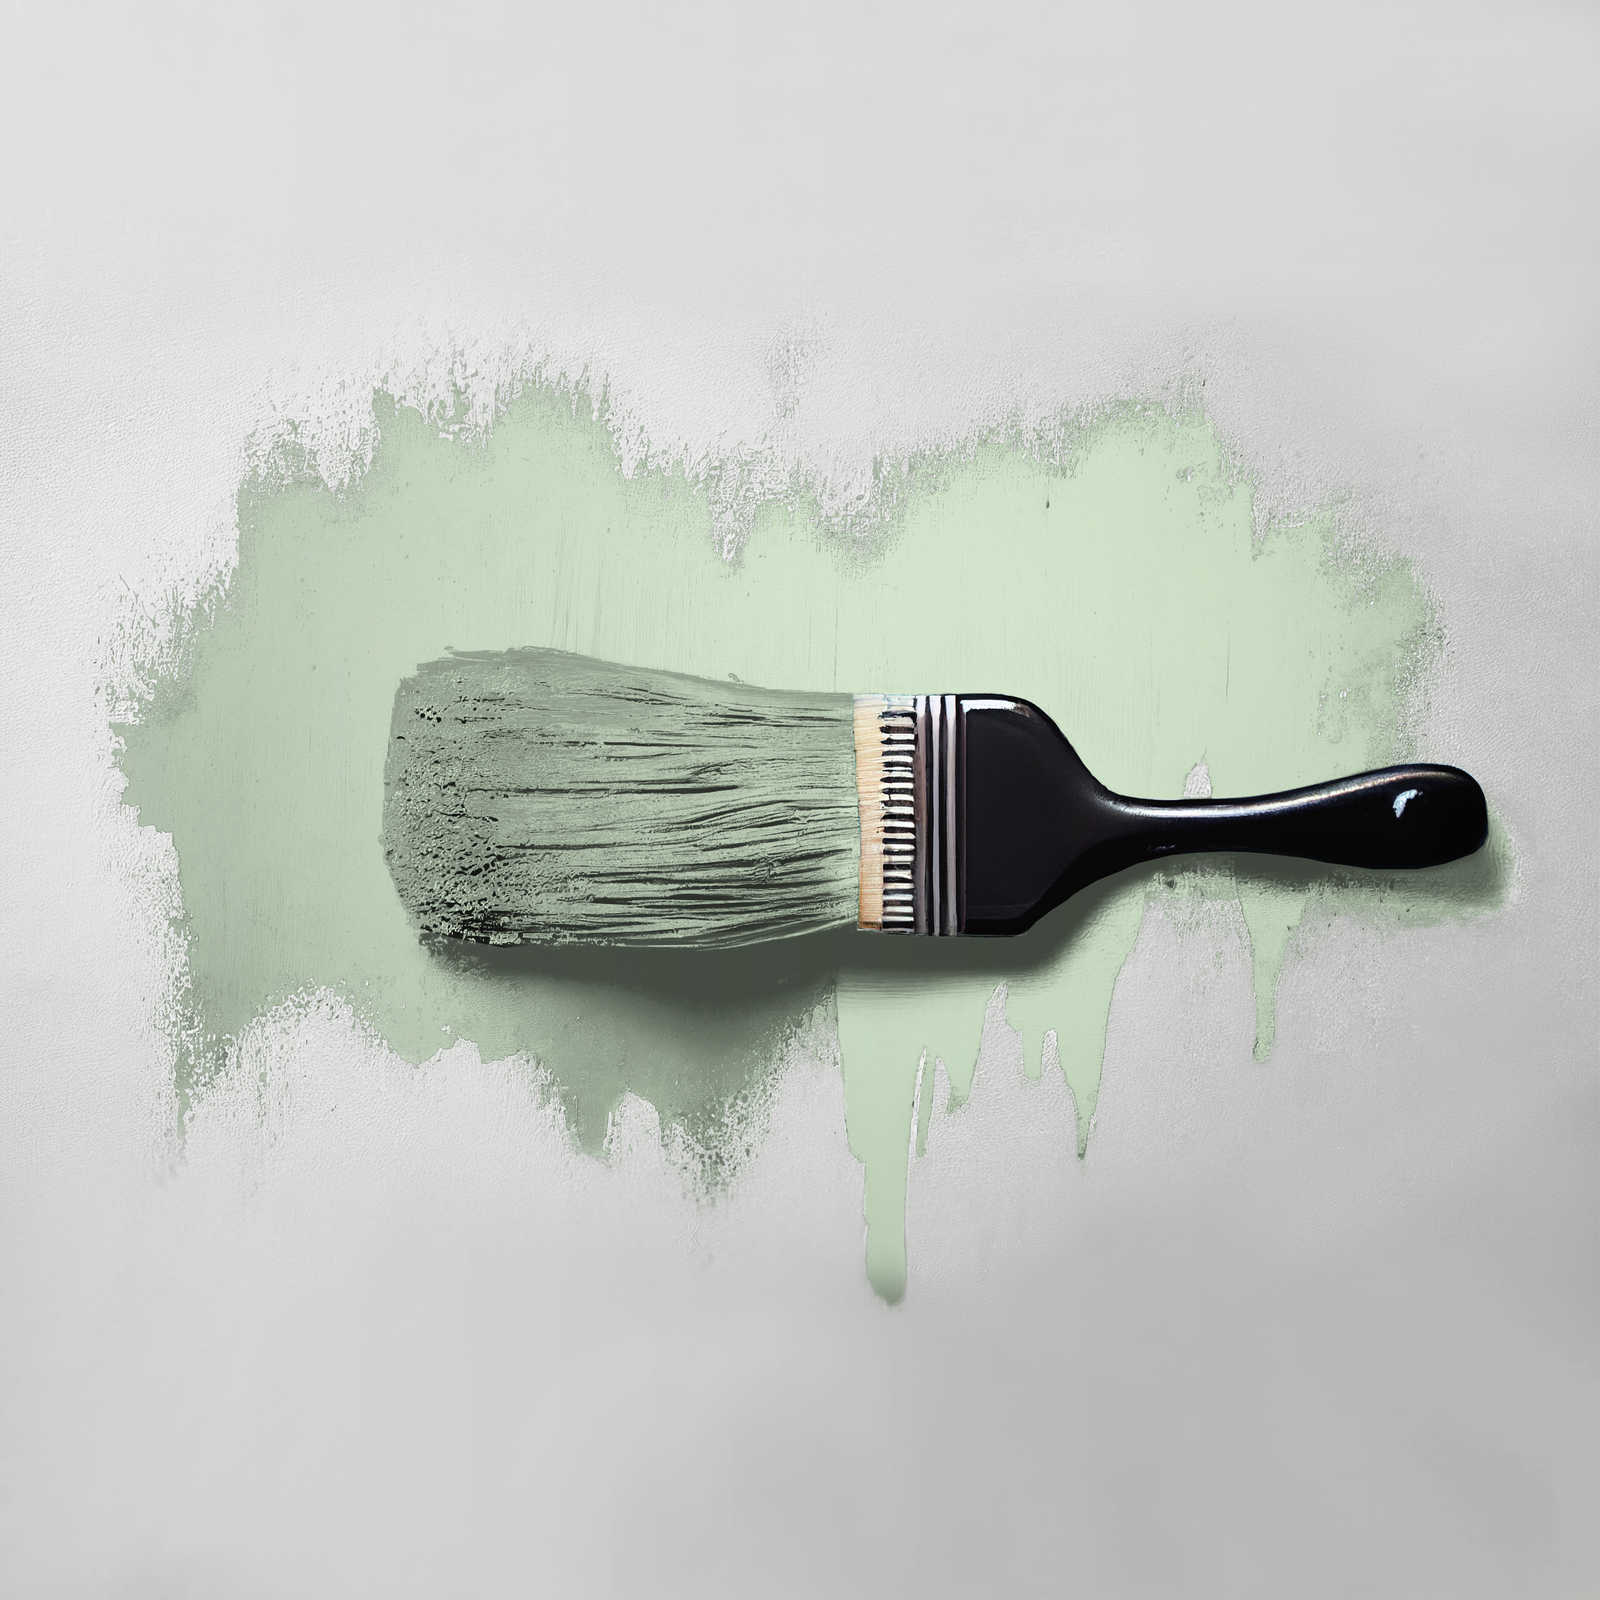             Pittura murale TCK4007 »Woodruff Cream« in verde pastello sereno – 2,5 litri
        